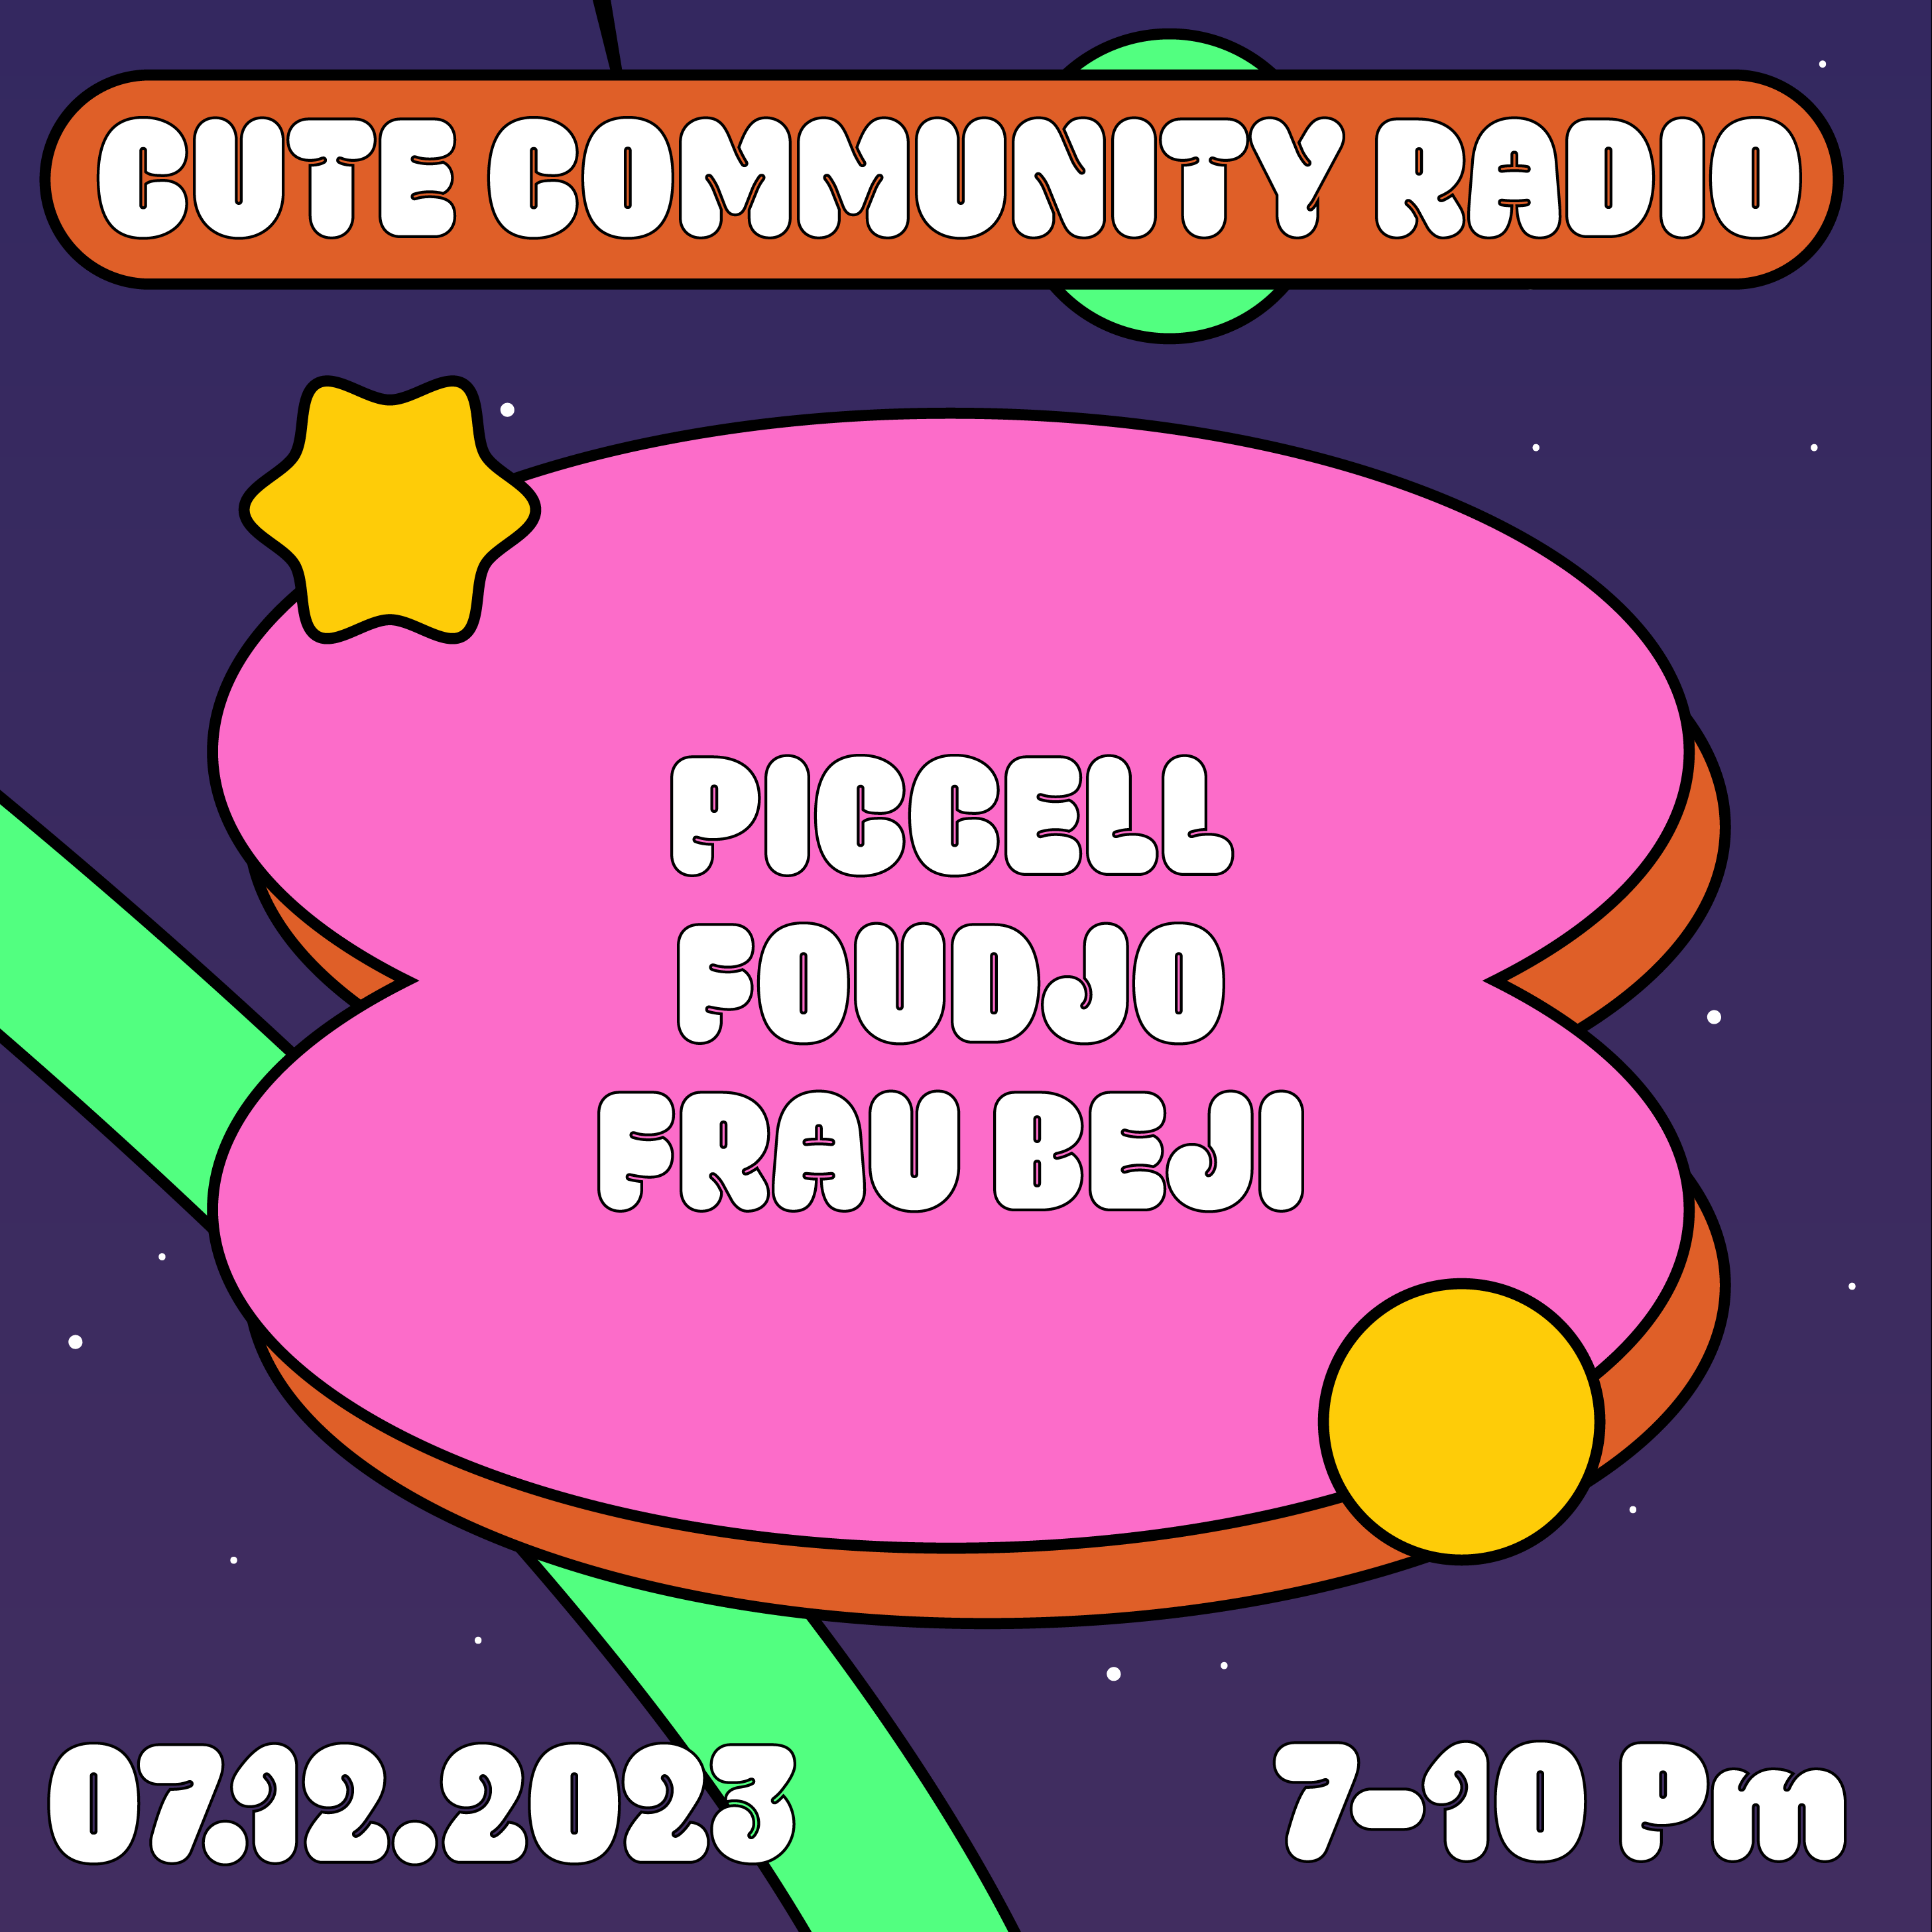 Cute Community Radio